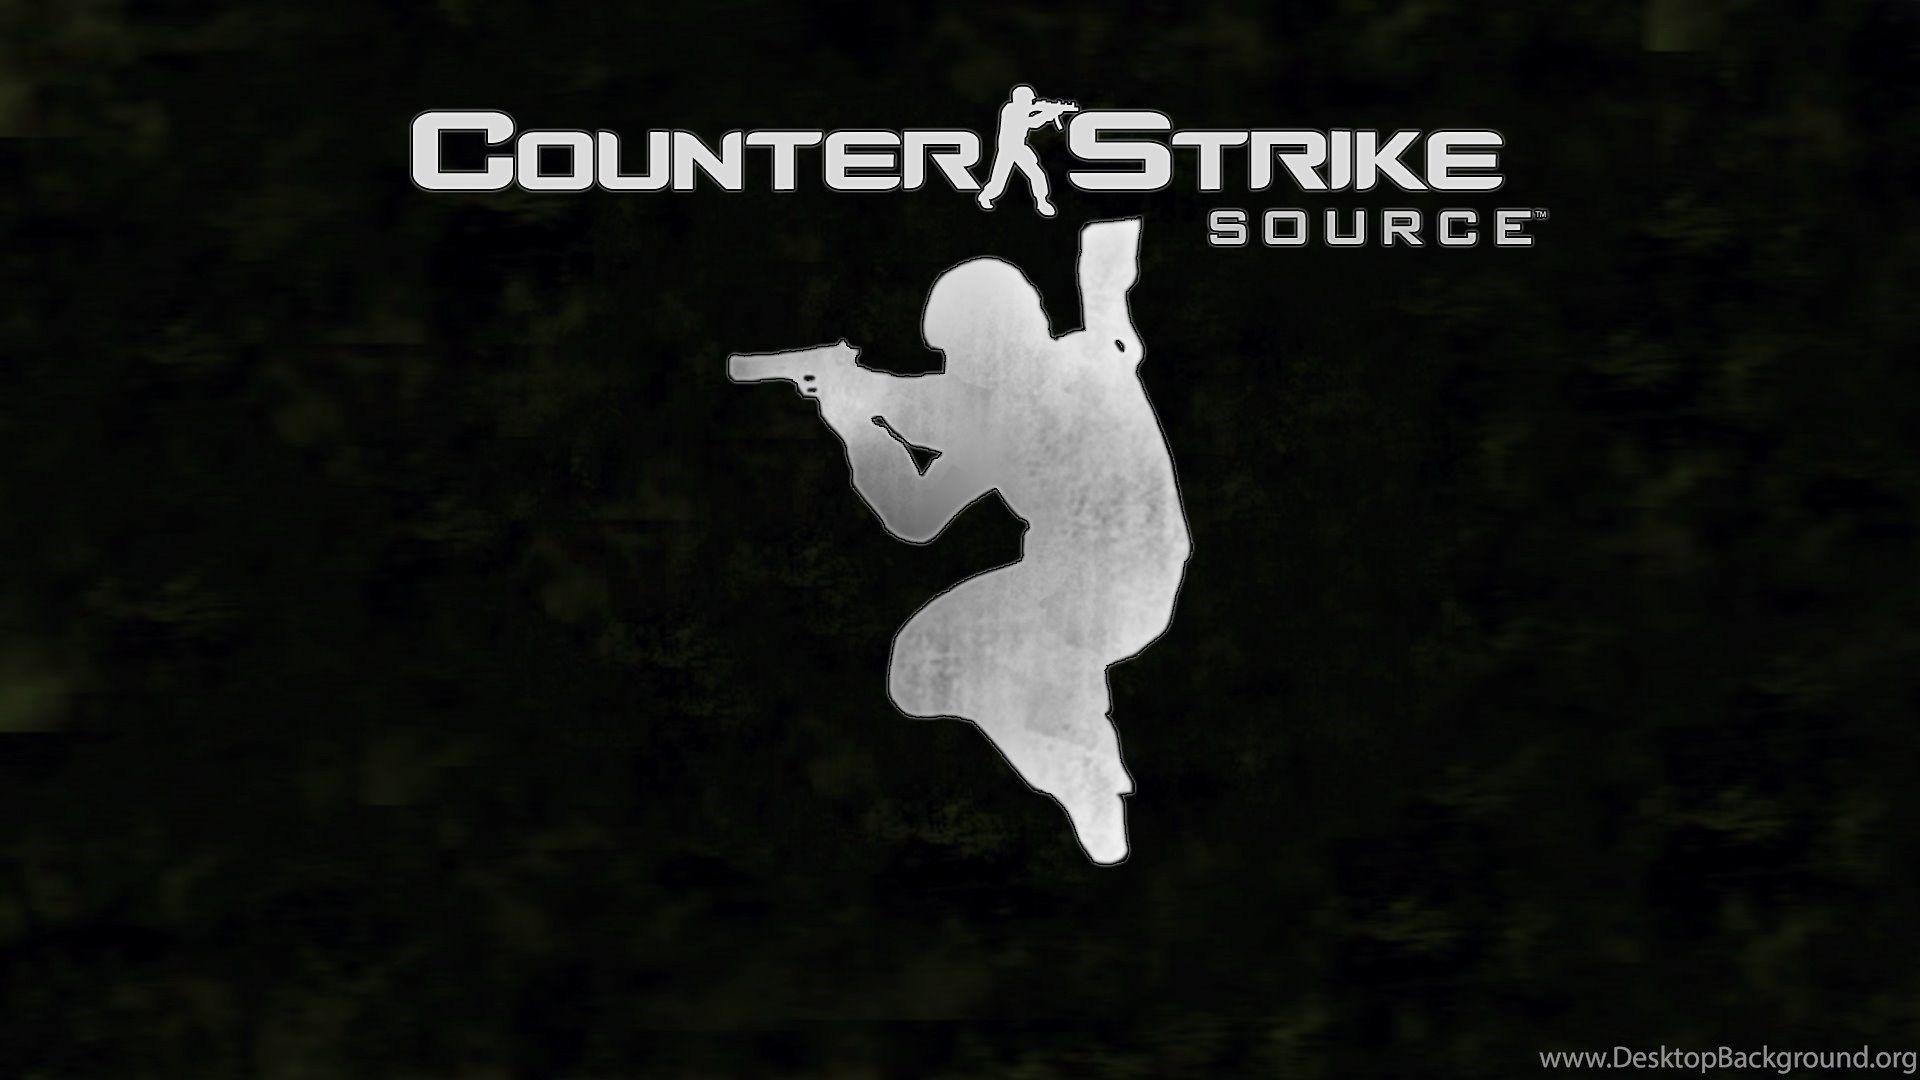 Counter Strike Source Logo Wallpaper. Desktop Background